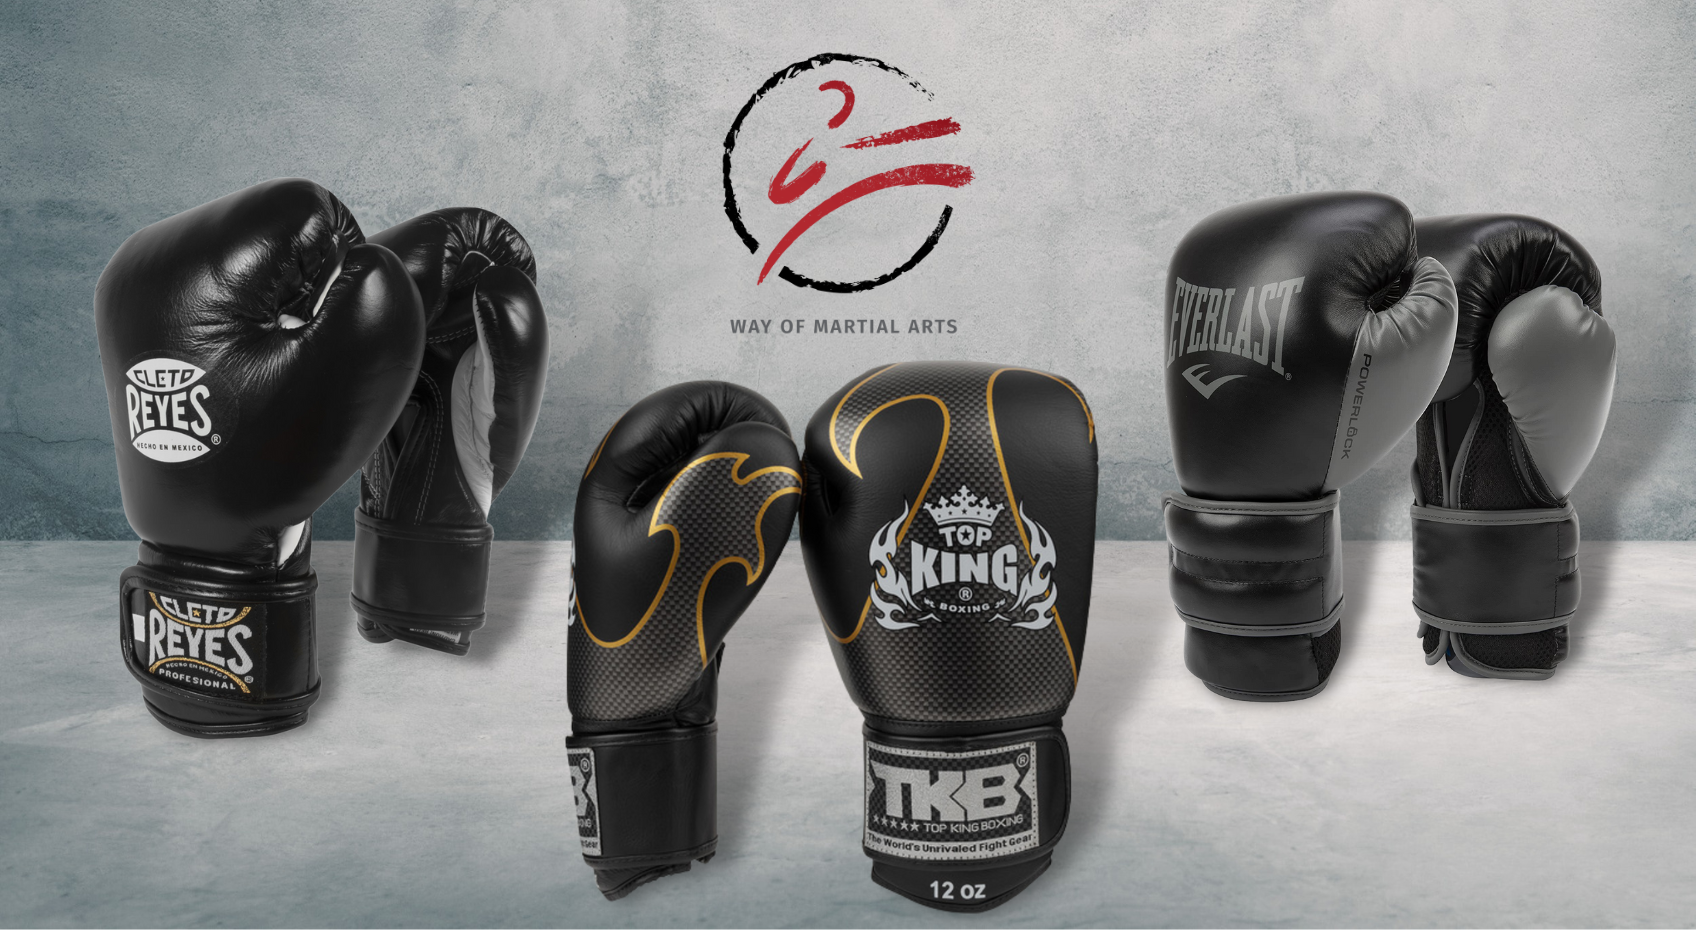 Best Boxing gloves, top king boxing gloves, training gloves